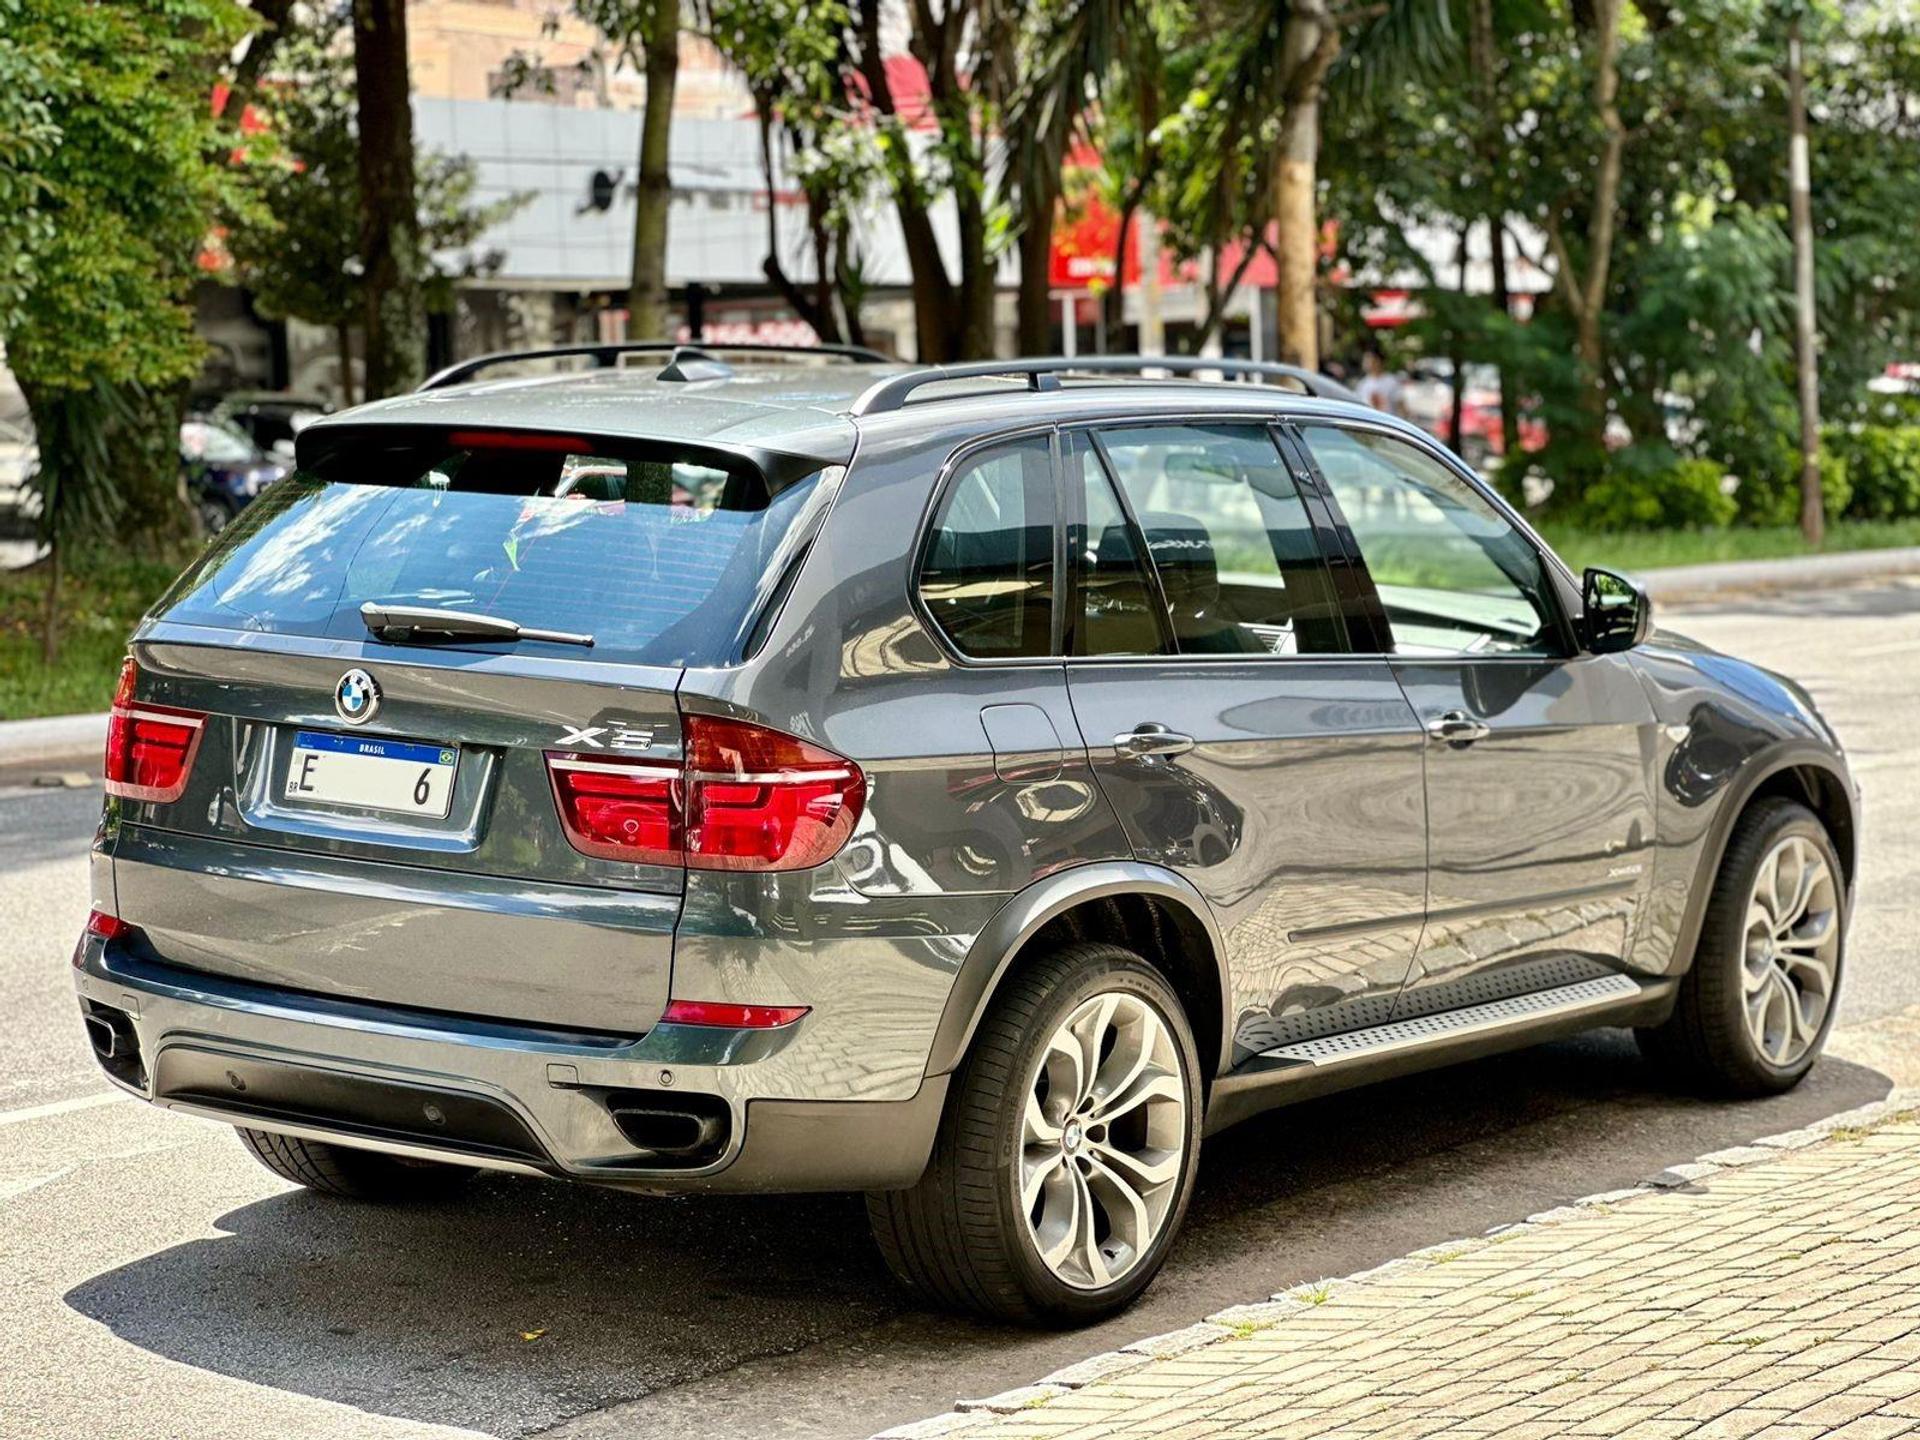 BMW X5 tabela fipe